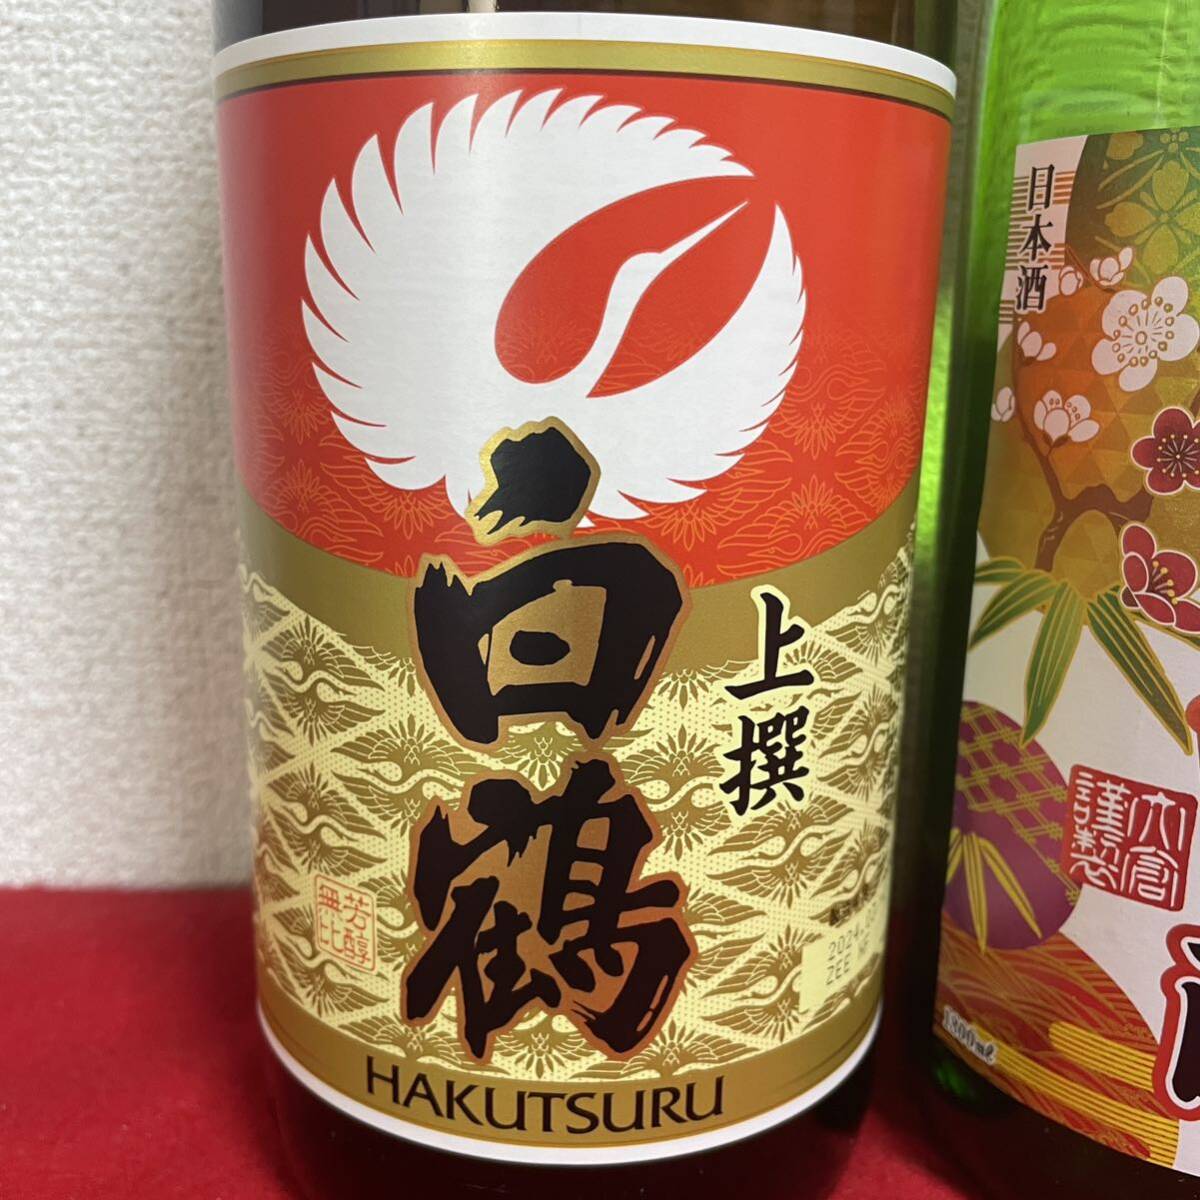 [K1969-] старый sake японкое рисовое вино (sake) месяц багряник японский . дзюнмаи сакэ большой сакэ гиндзё 1 шт. 23 год 11 месяц производство сверху . белый журавль 2 шт 24 год 3 месяц 23 год 12 месяц производство 1800ml 15~16% итого 3шт.